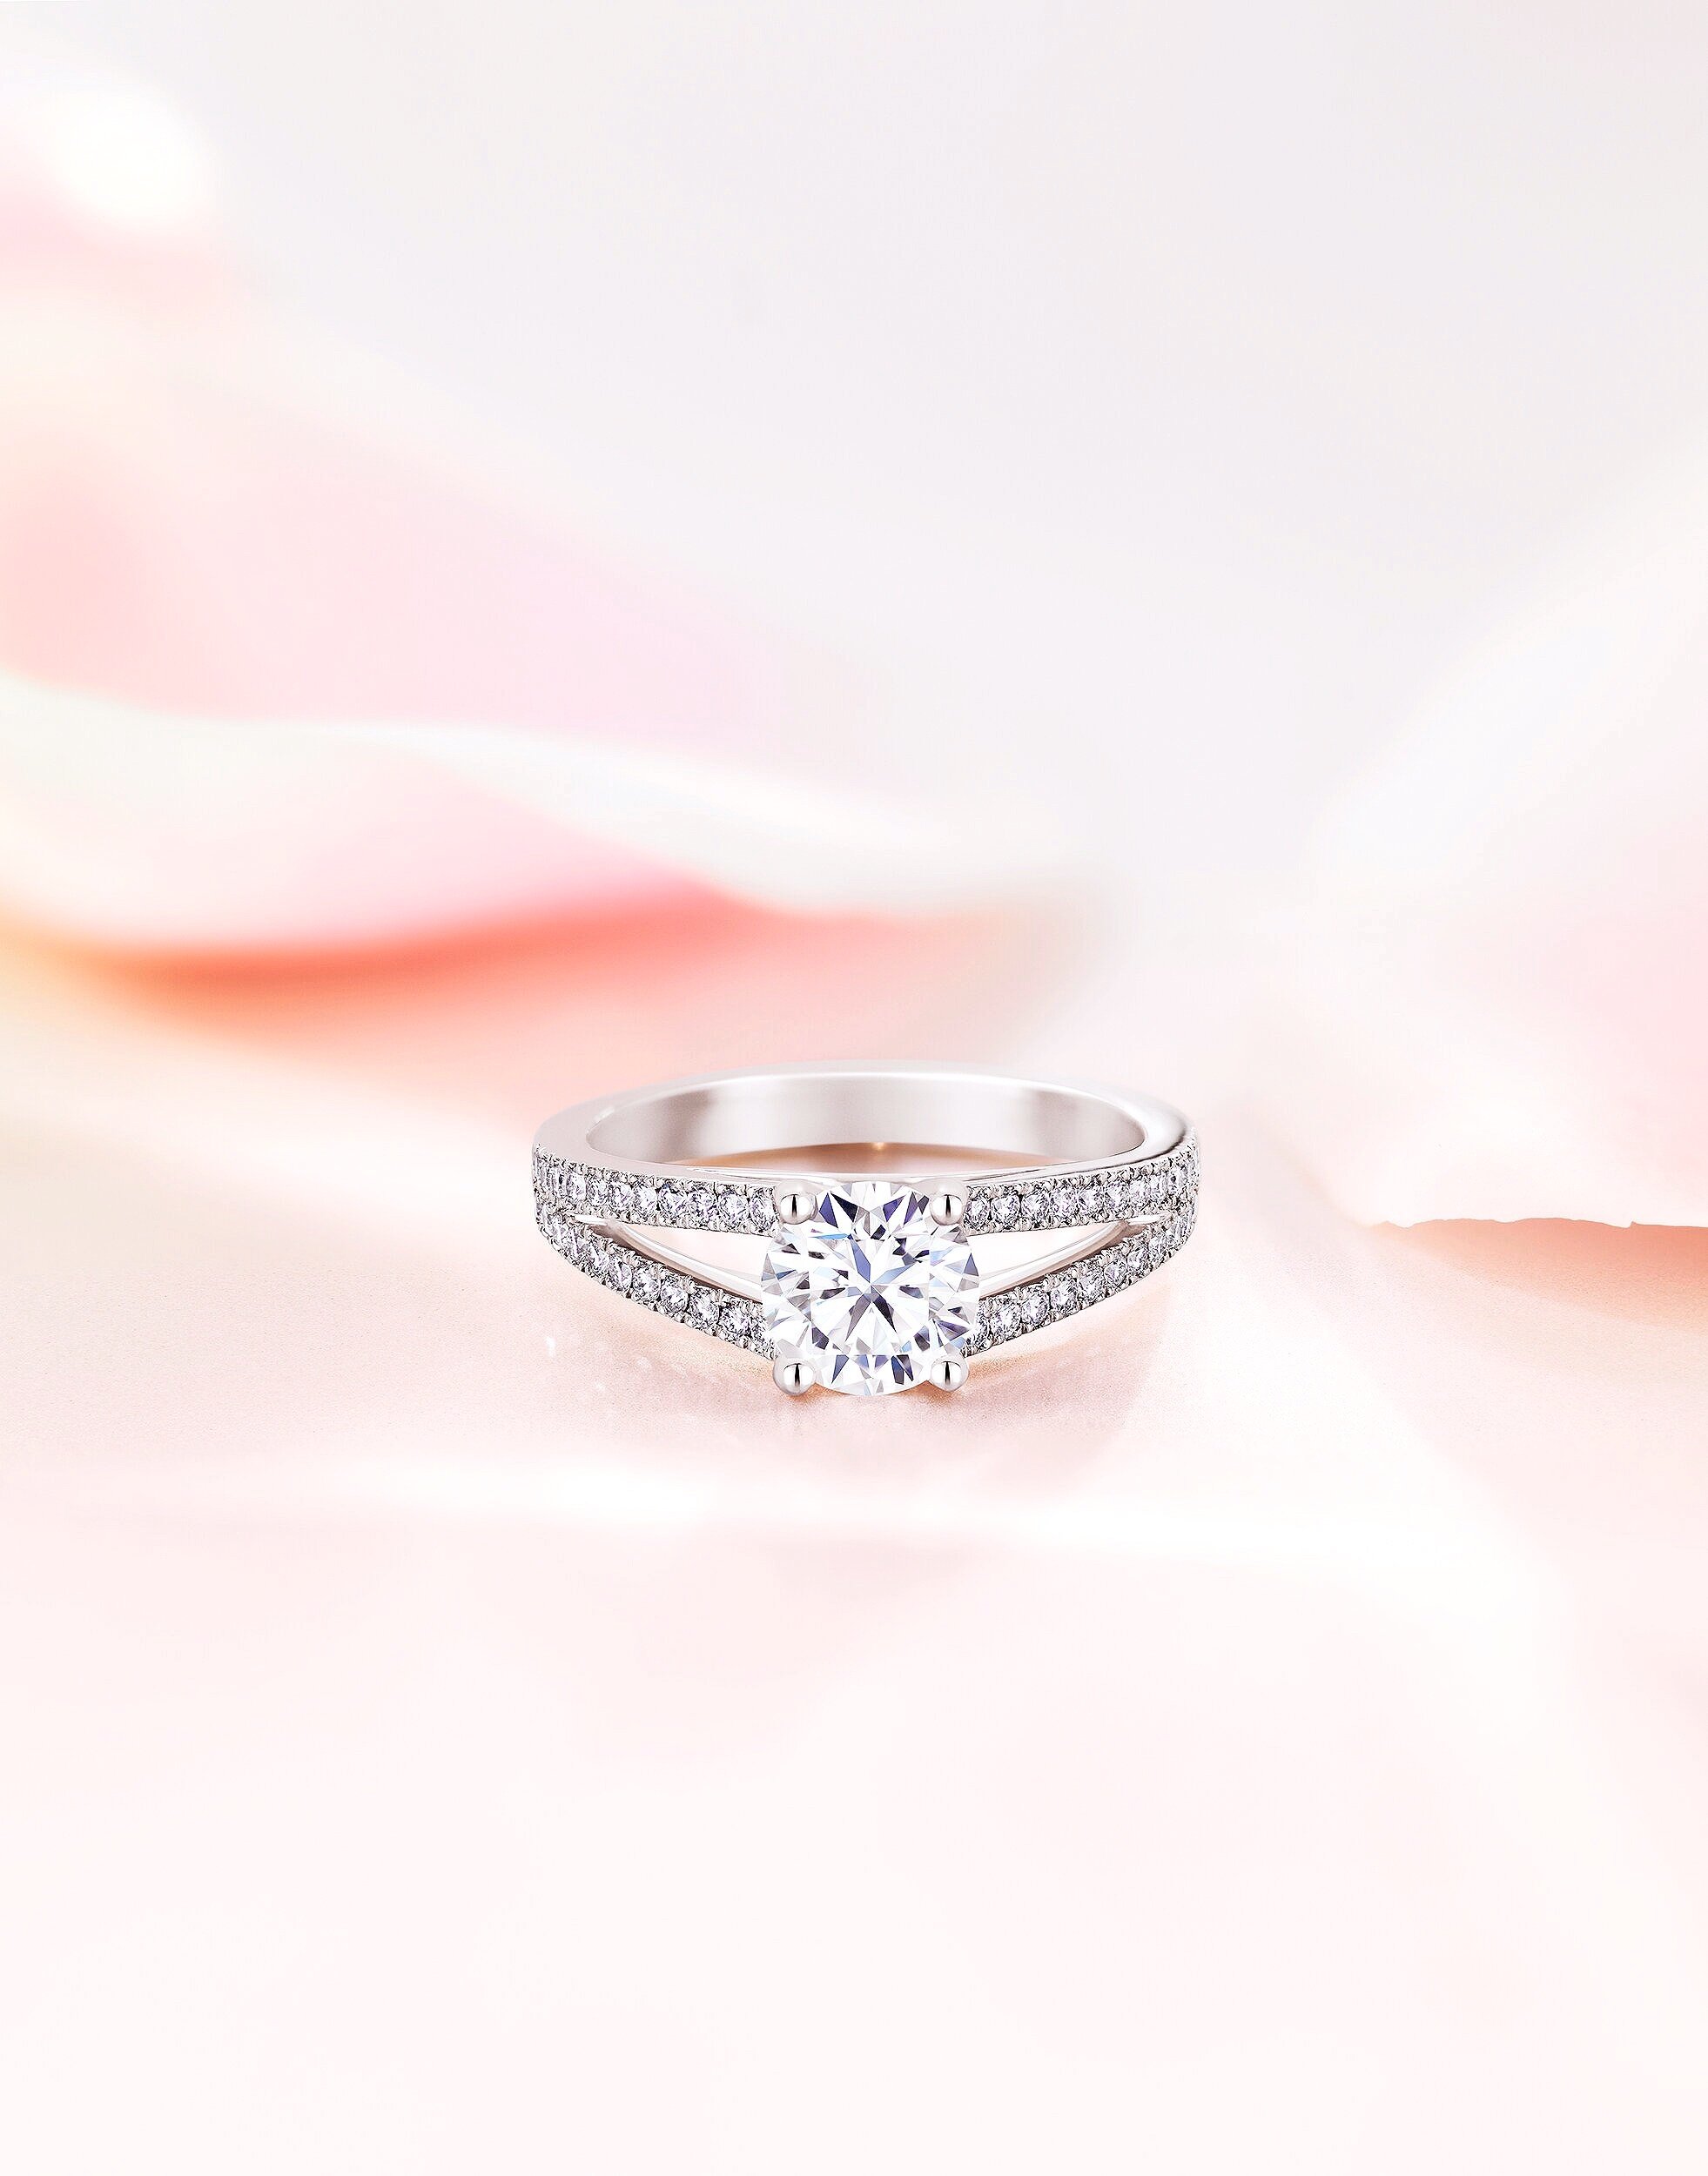  Diamond engagement ring shot for De Beers Diamond Jewellers 